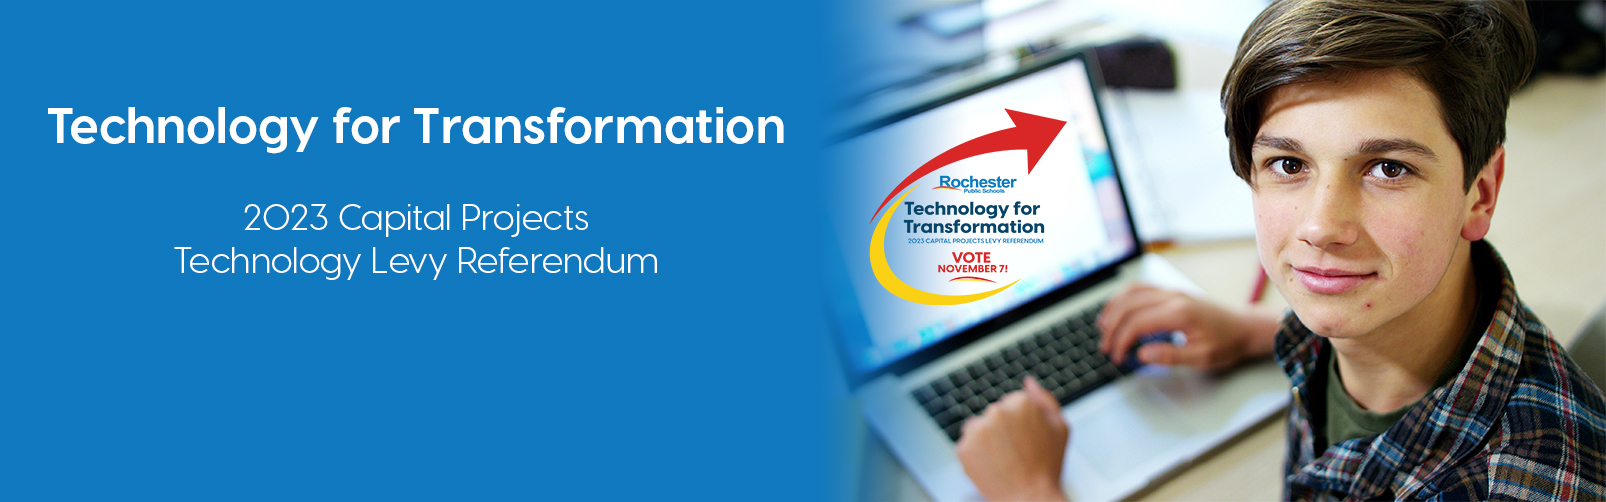 Technology for Transformation slide